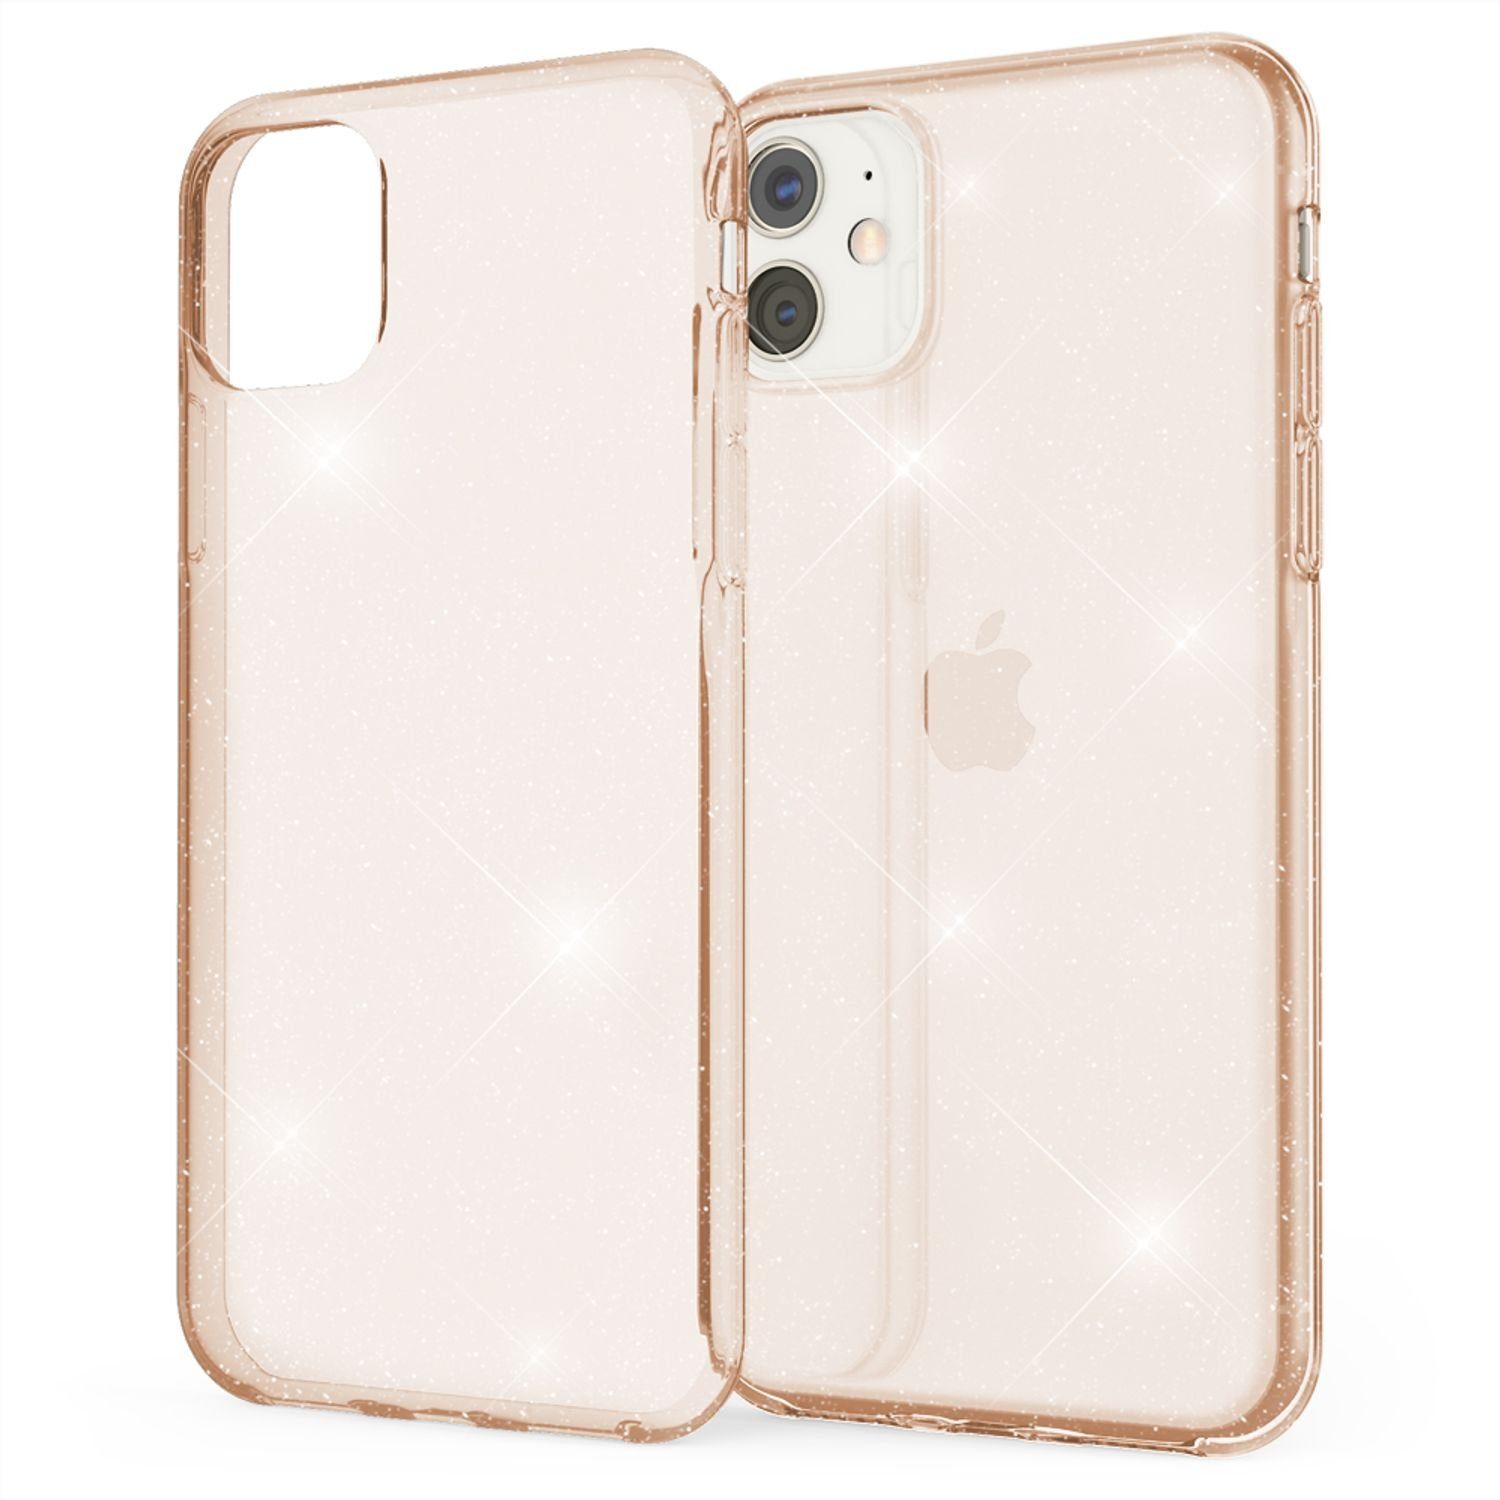 Nalia Smartphone-Hülle Apple iPhone 11, Klare Glitzer Hülle / Silikon Transparent / Glitter Cover / Bling Case